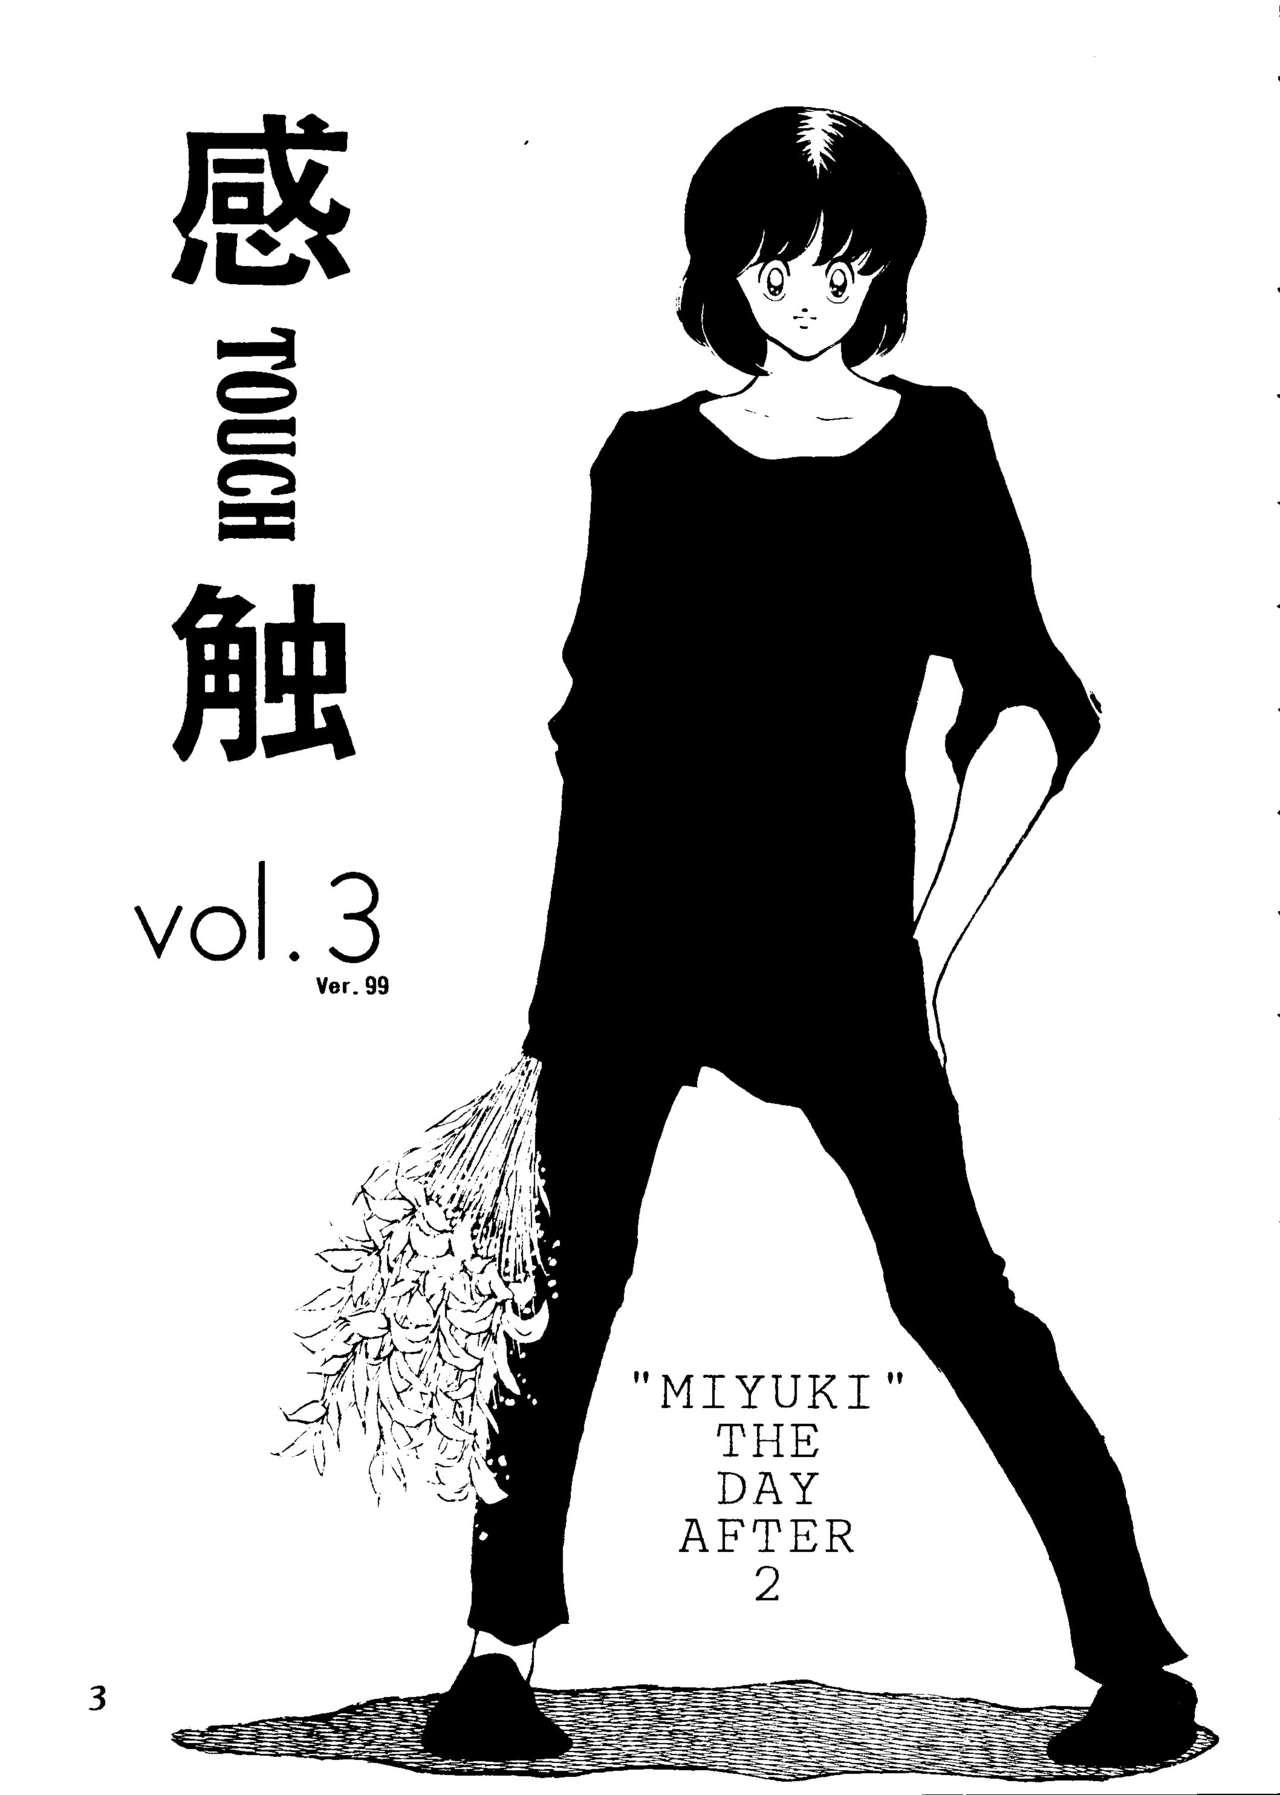 Girls Getting Fucked Touch vol. 3 ver.99 - Miyuki Pmv - Page 2